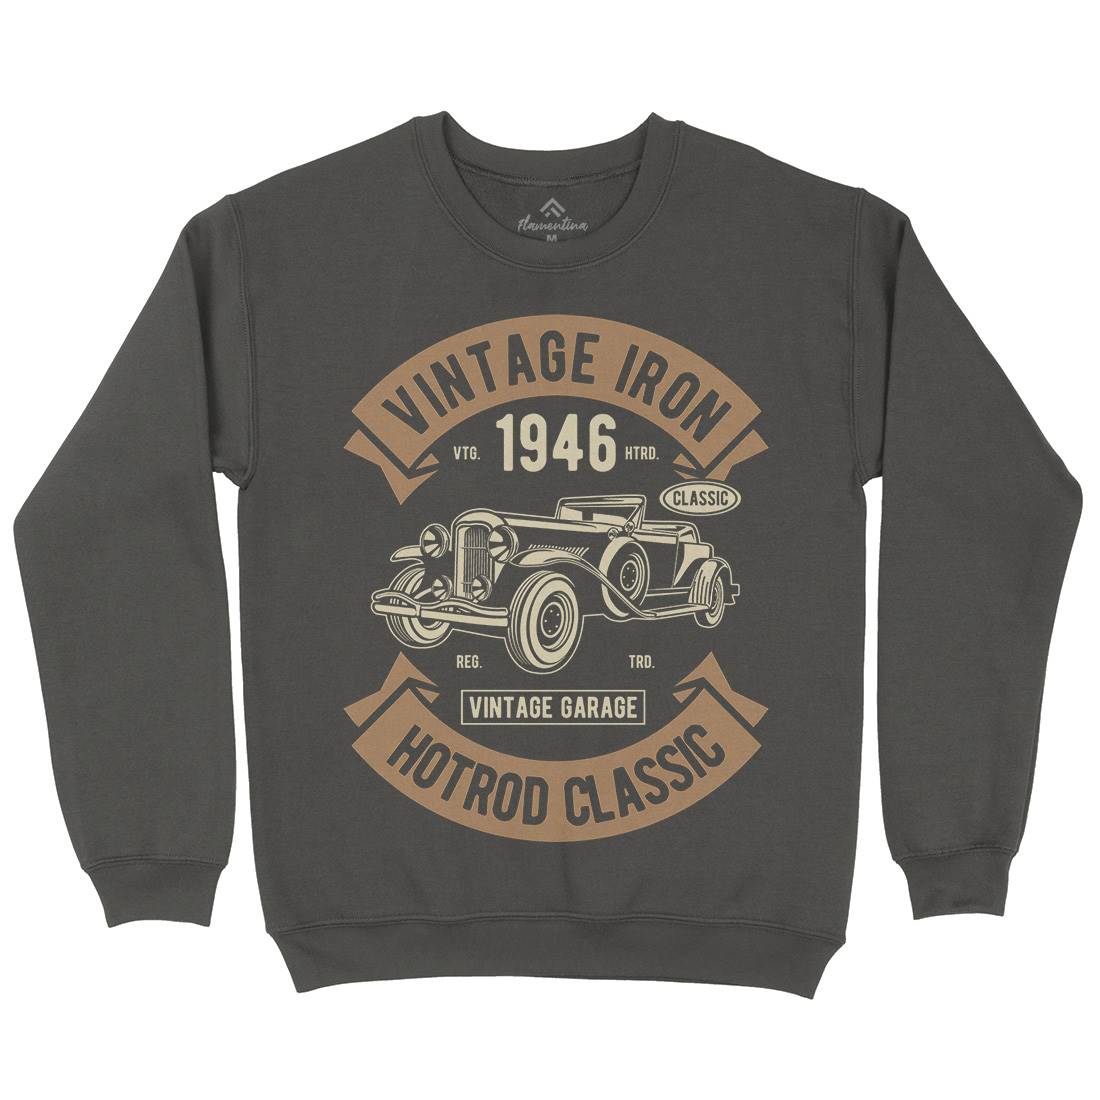 Vintage Iron Classic Kids Crew Neck Sweatshirt Cars D595